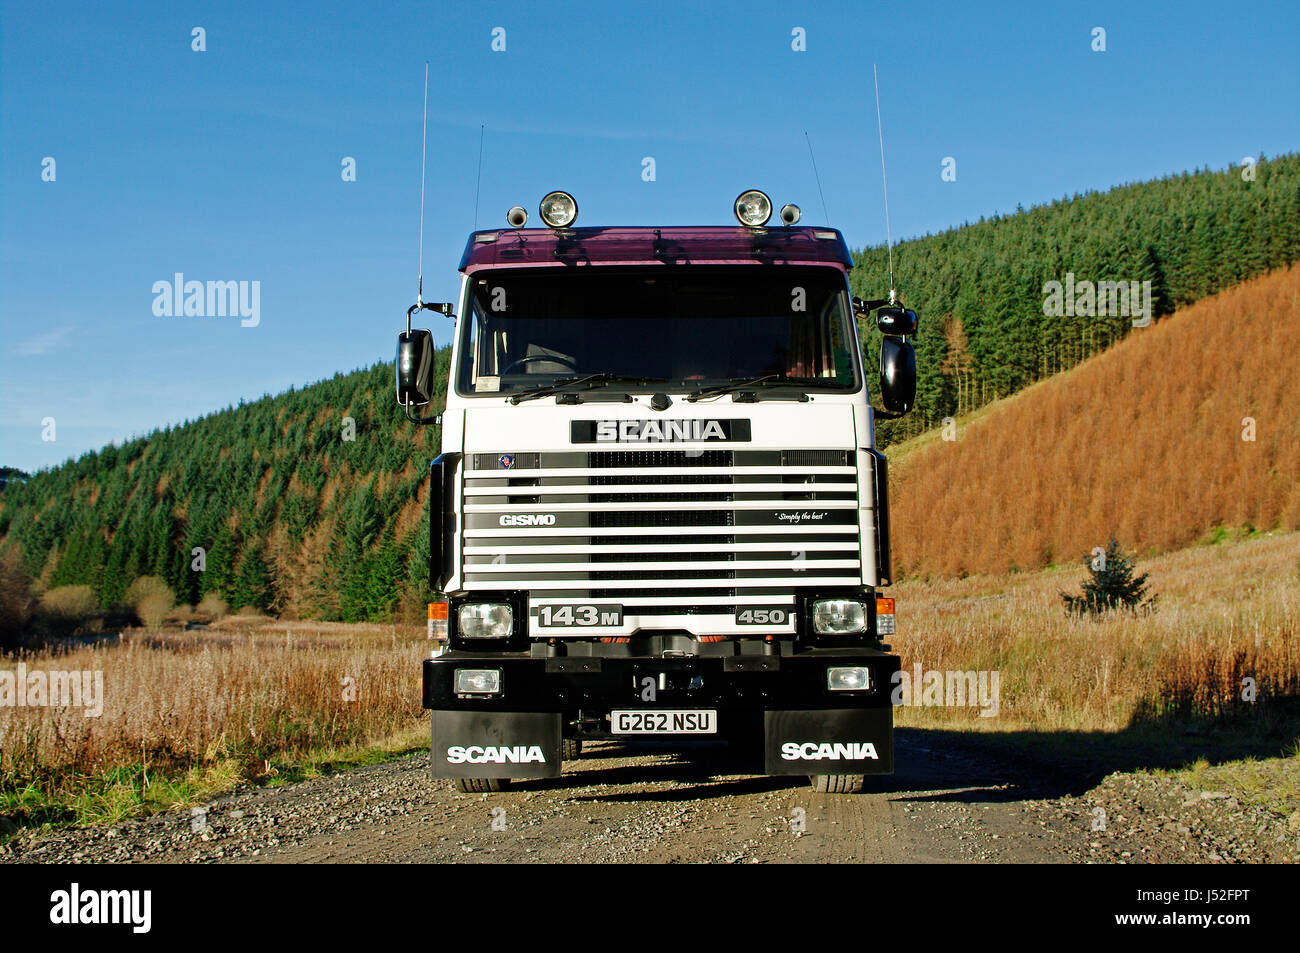 Scania 143M Stock Photo